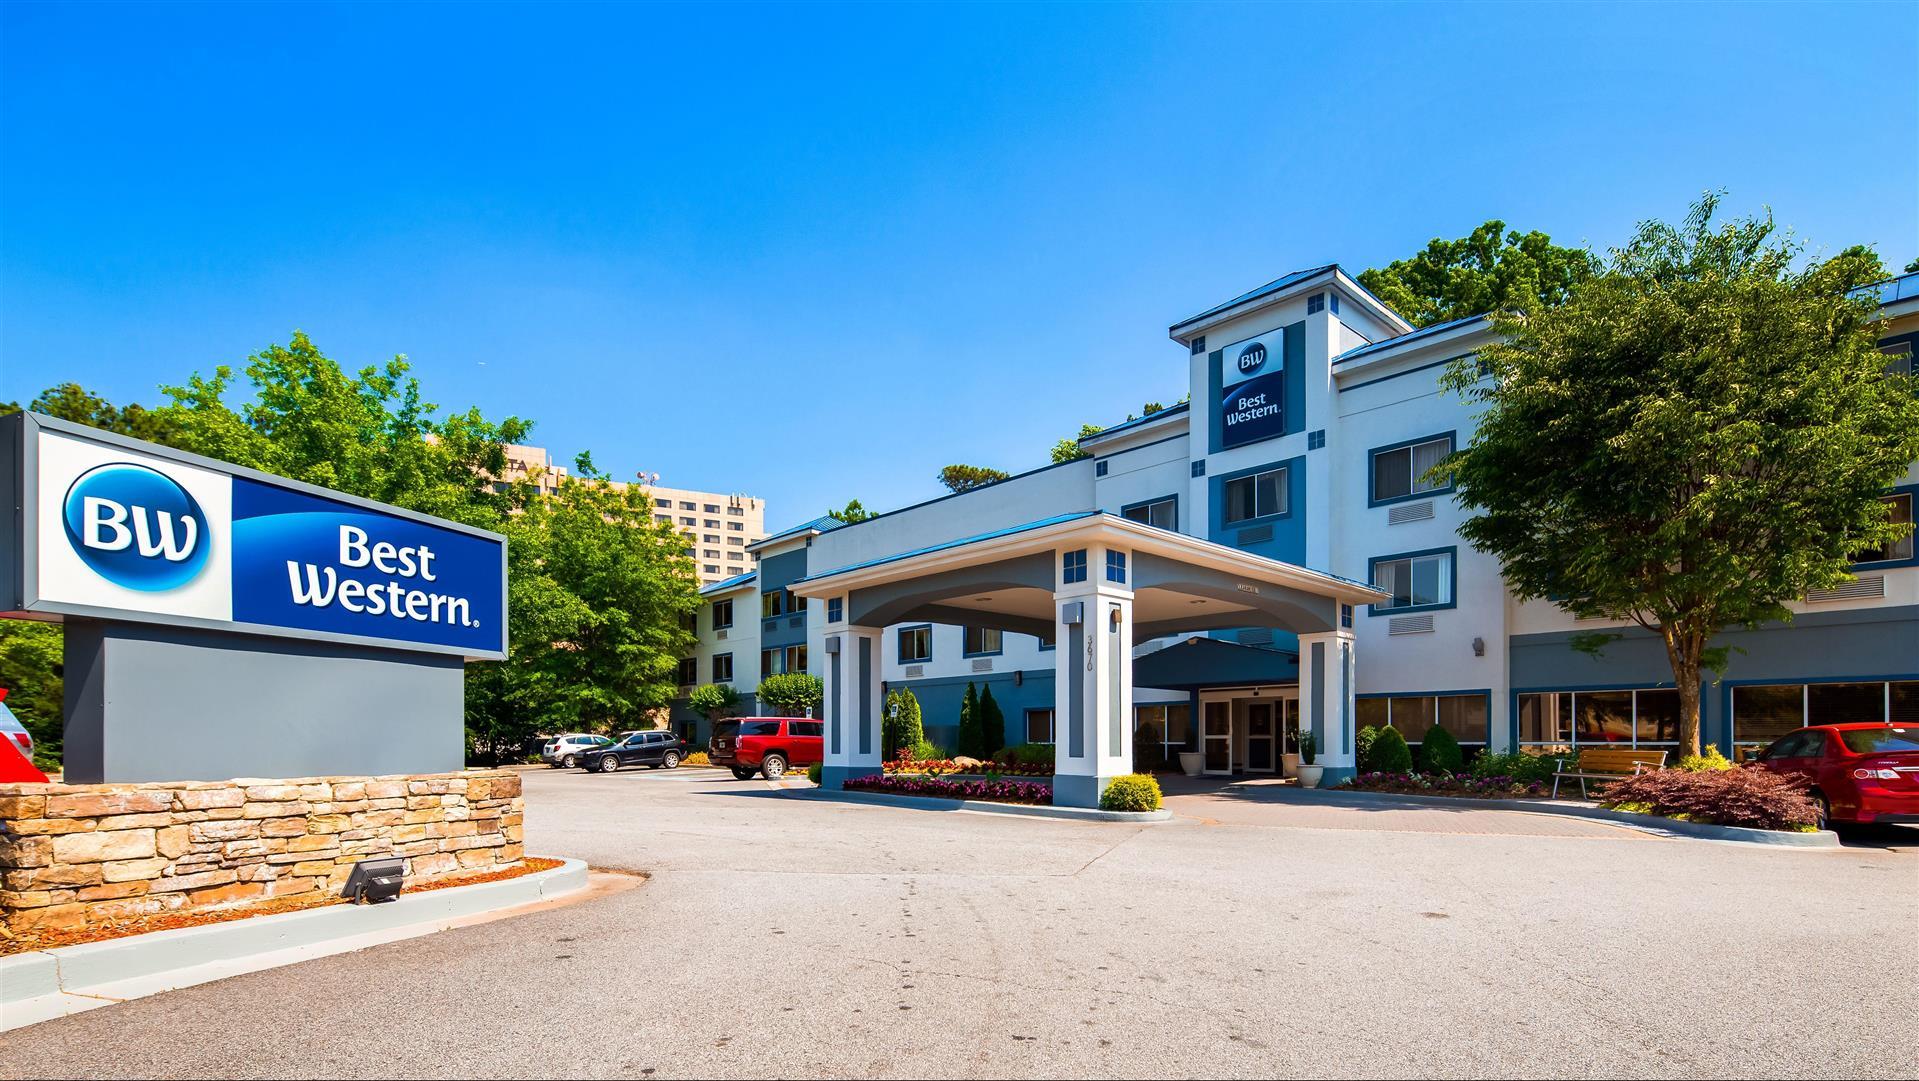 Best Western Gwinnett Center Hotel in Duluth, GA